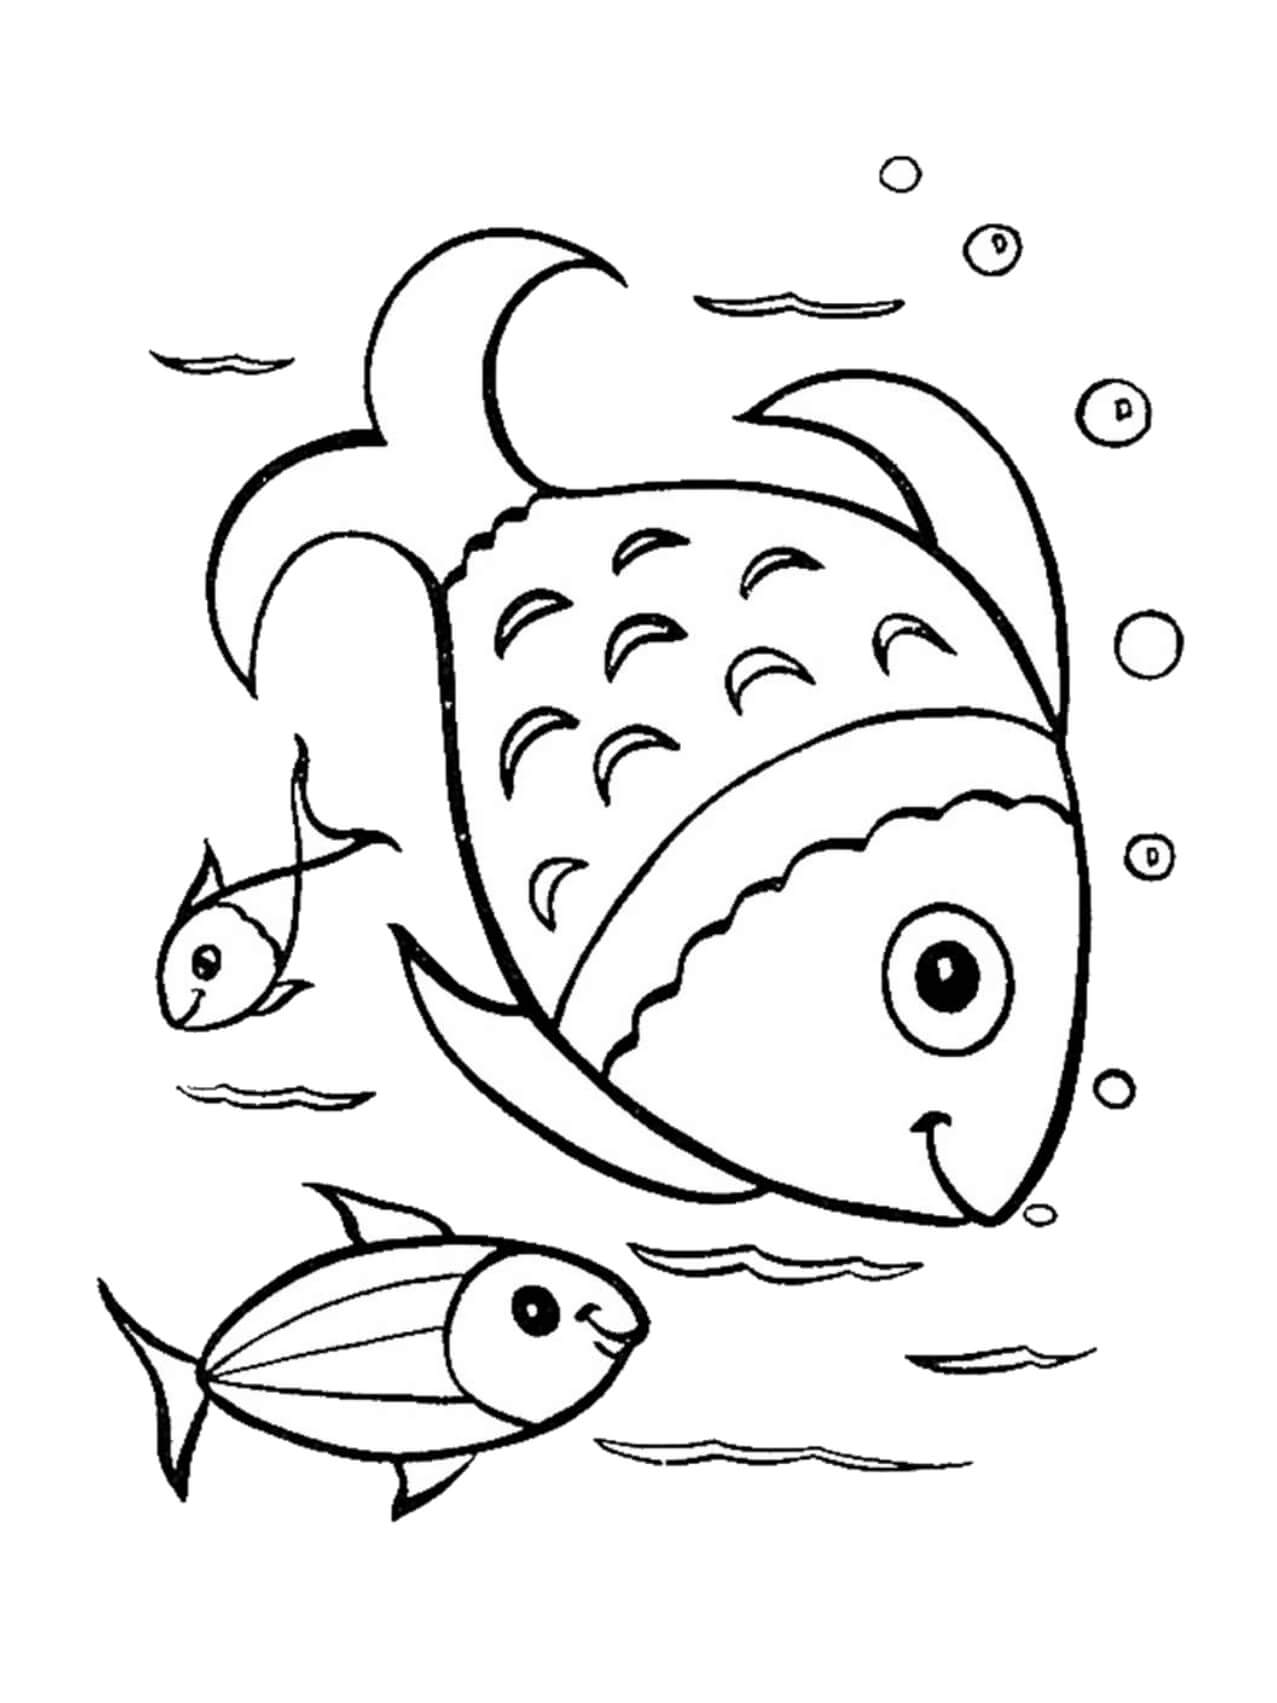 Раскраски рыбки для детей 3 4 лет. Раскраска рыбка. Рыбка раскраска для детей. Рыба раскраска для детей. Оыбараскраска для детей.